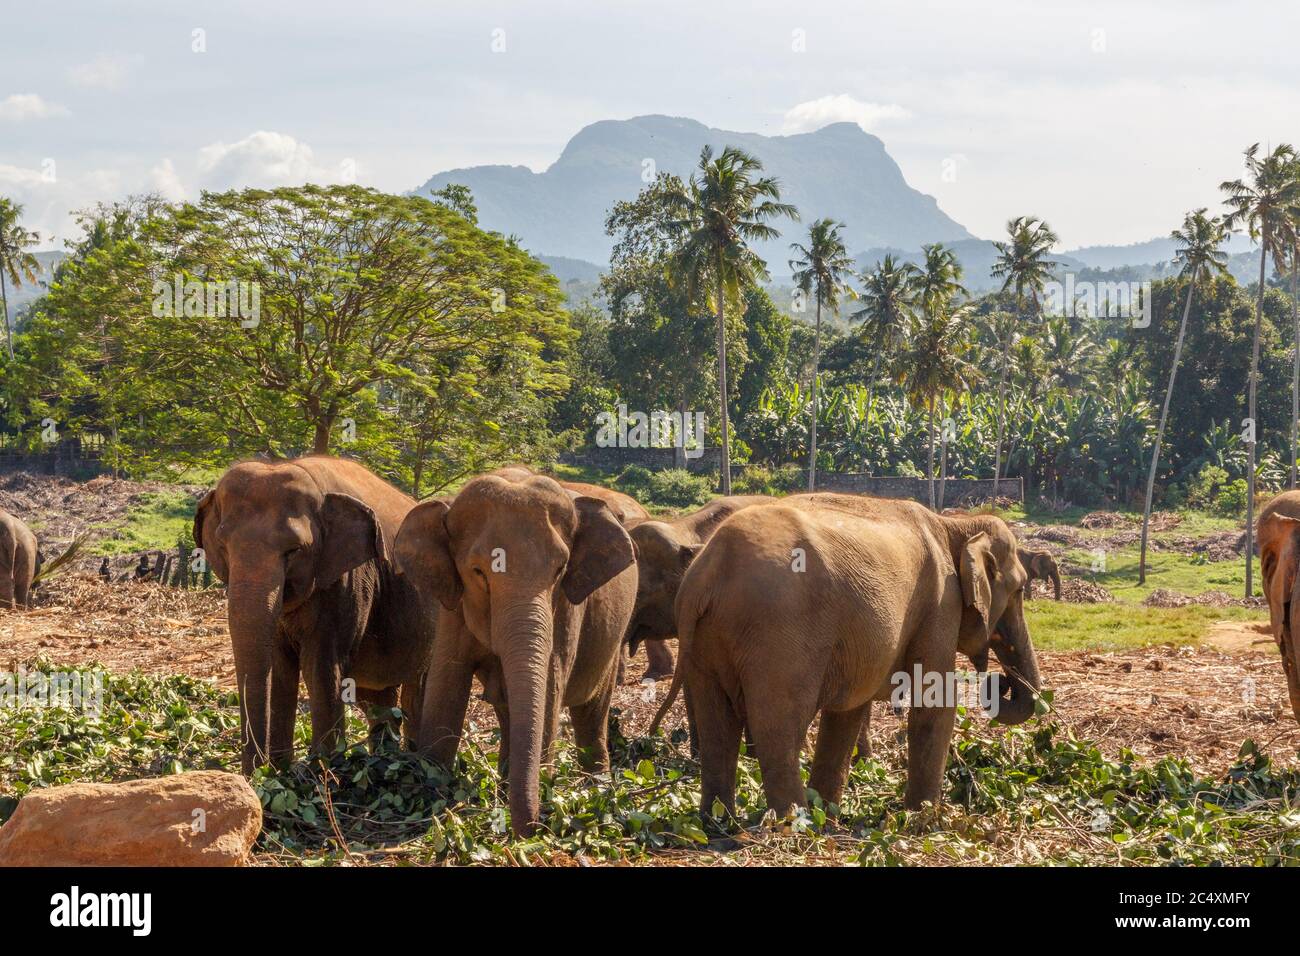 Elephant herd made up of female elephants and juvenile elephants grazing and enjoying the beautiful whether. Stock Photo